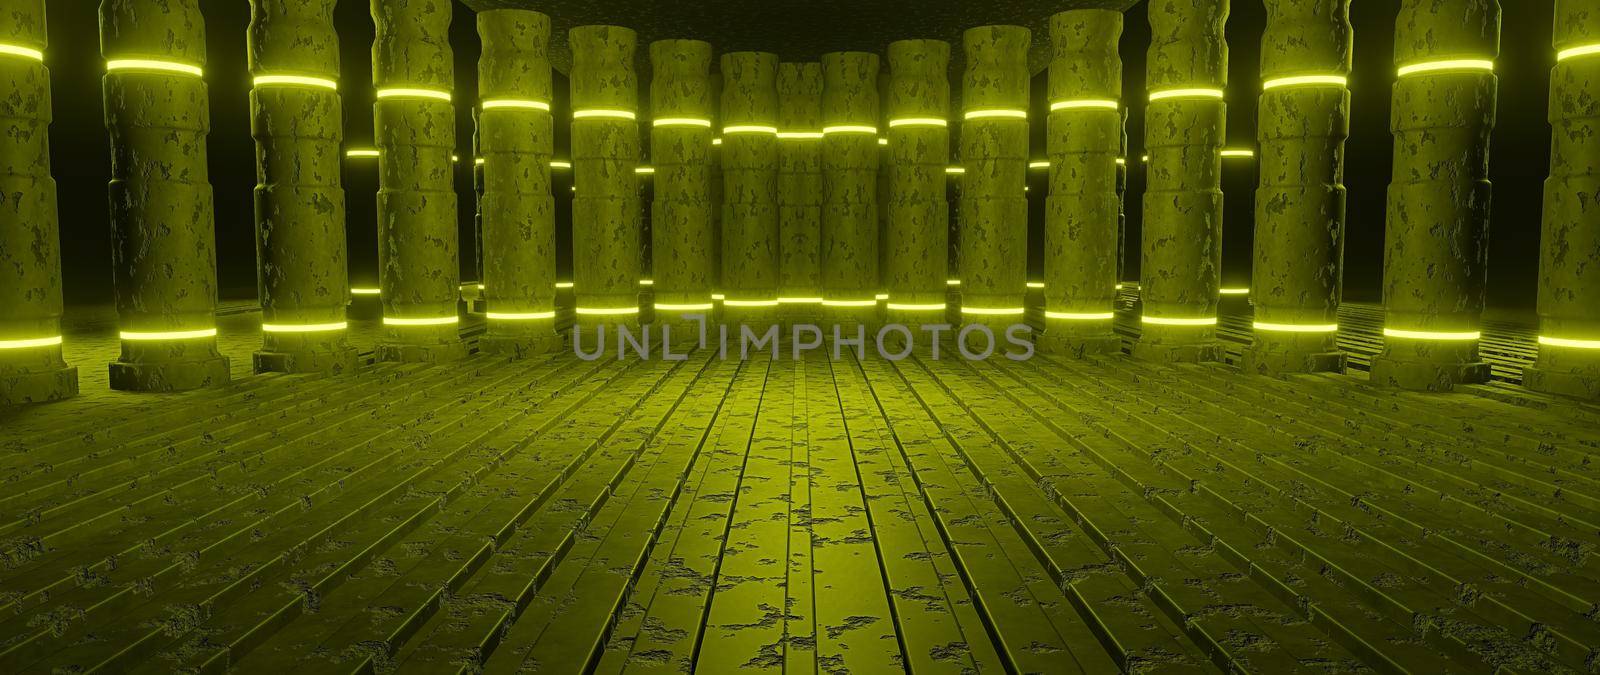 Futuristic Concrete Cement Panels Underground Tunnel Lighted Dark Brown Illustrative Banner Background Wallpaper Pedestal Concept 3D Rendering by yay_lmrb